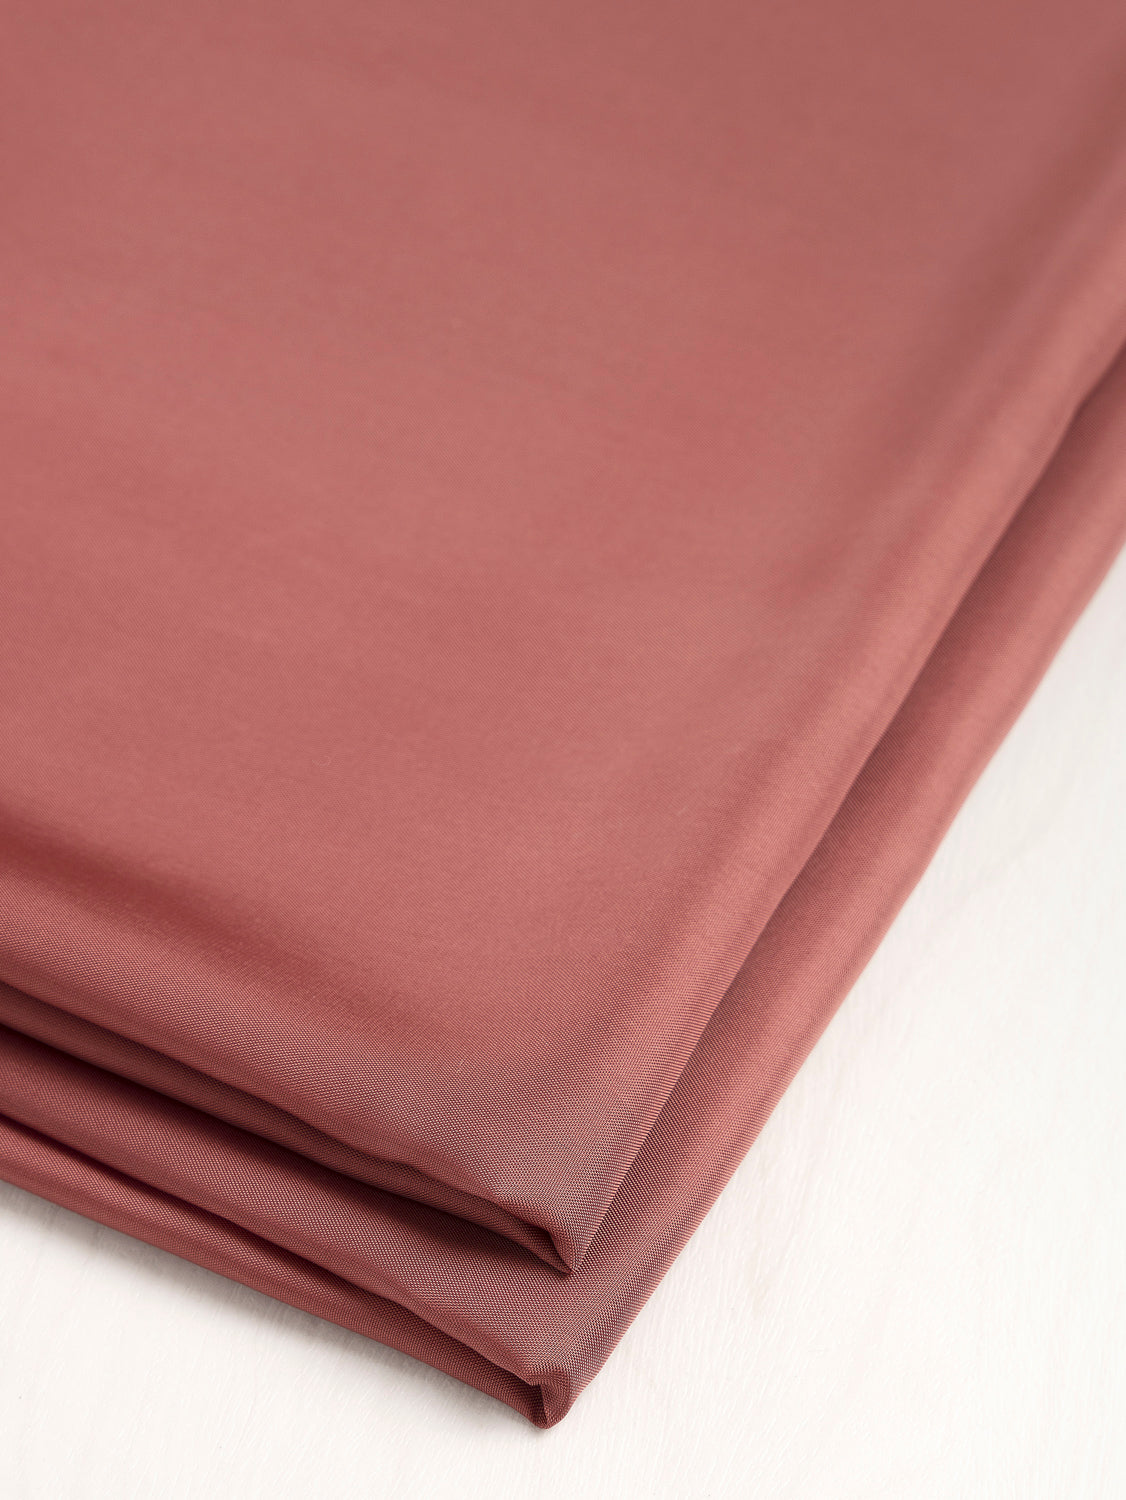 Bemberg Cupro Lining - Rust | Core Fabrics